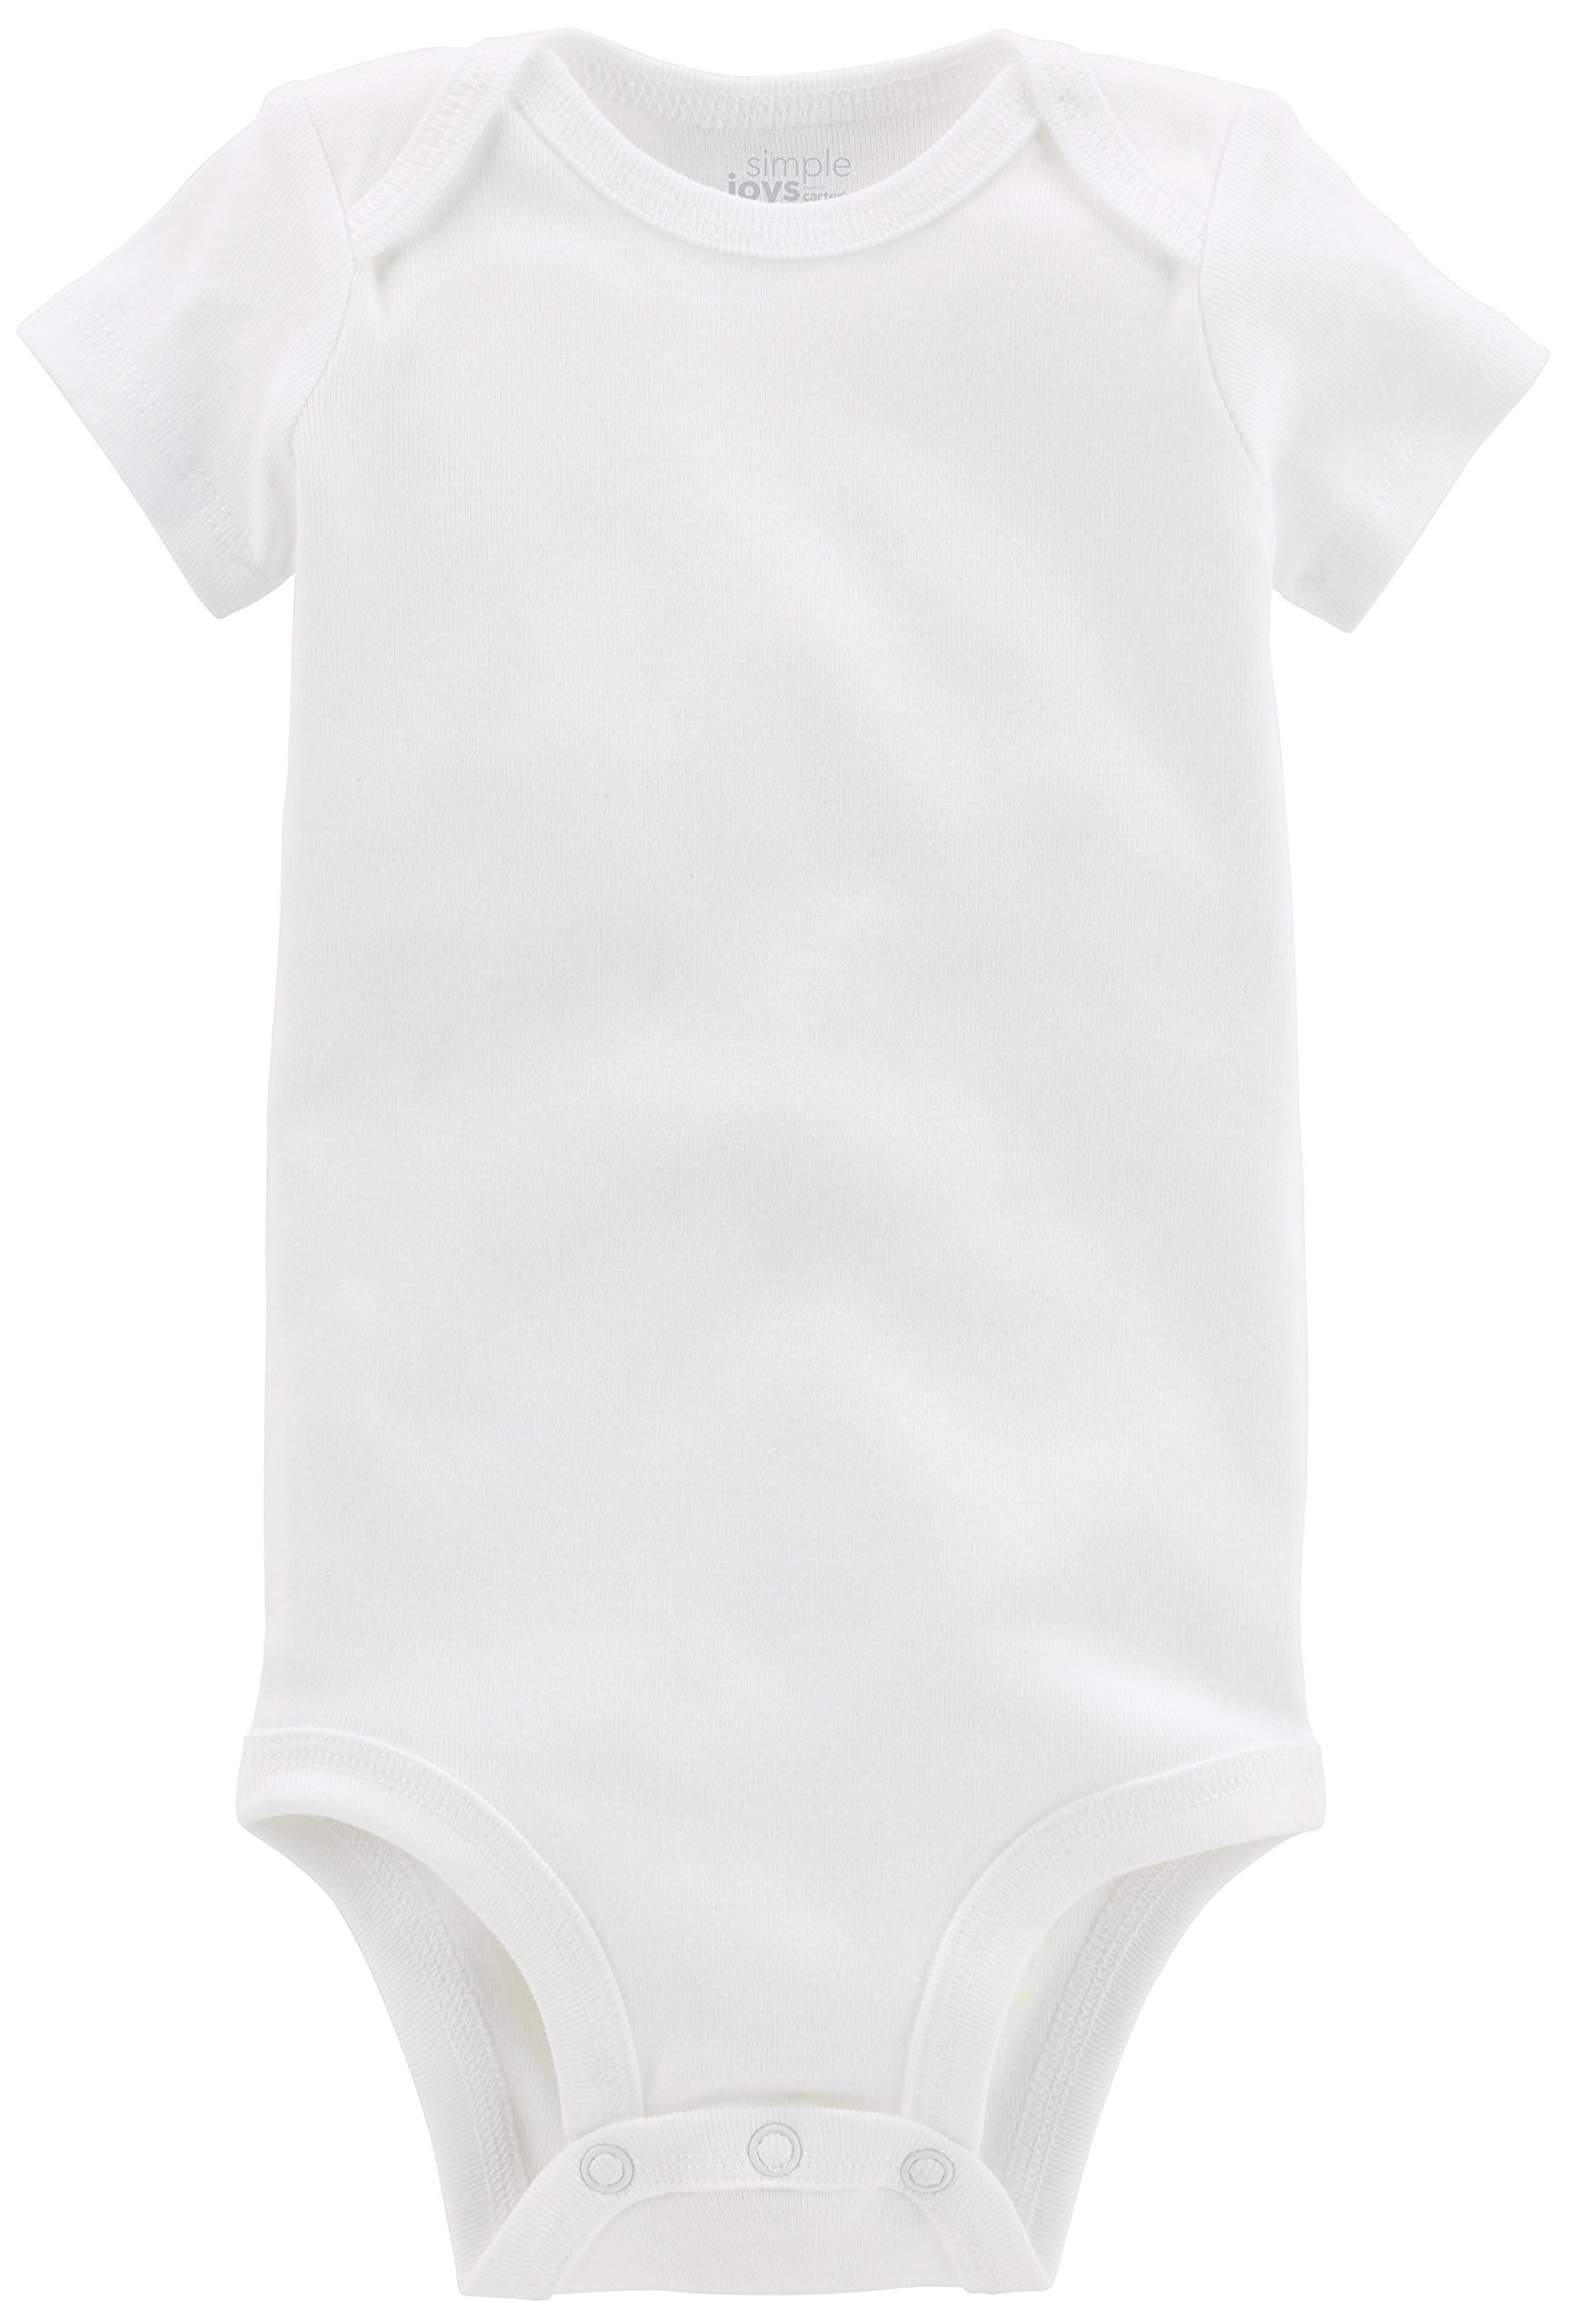 Simple Joys by Carter's Unisex Babies' Short-Sleeve Bodysuit, Pack of 3